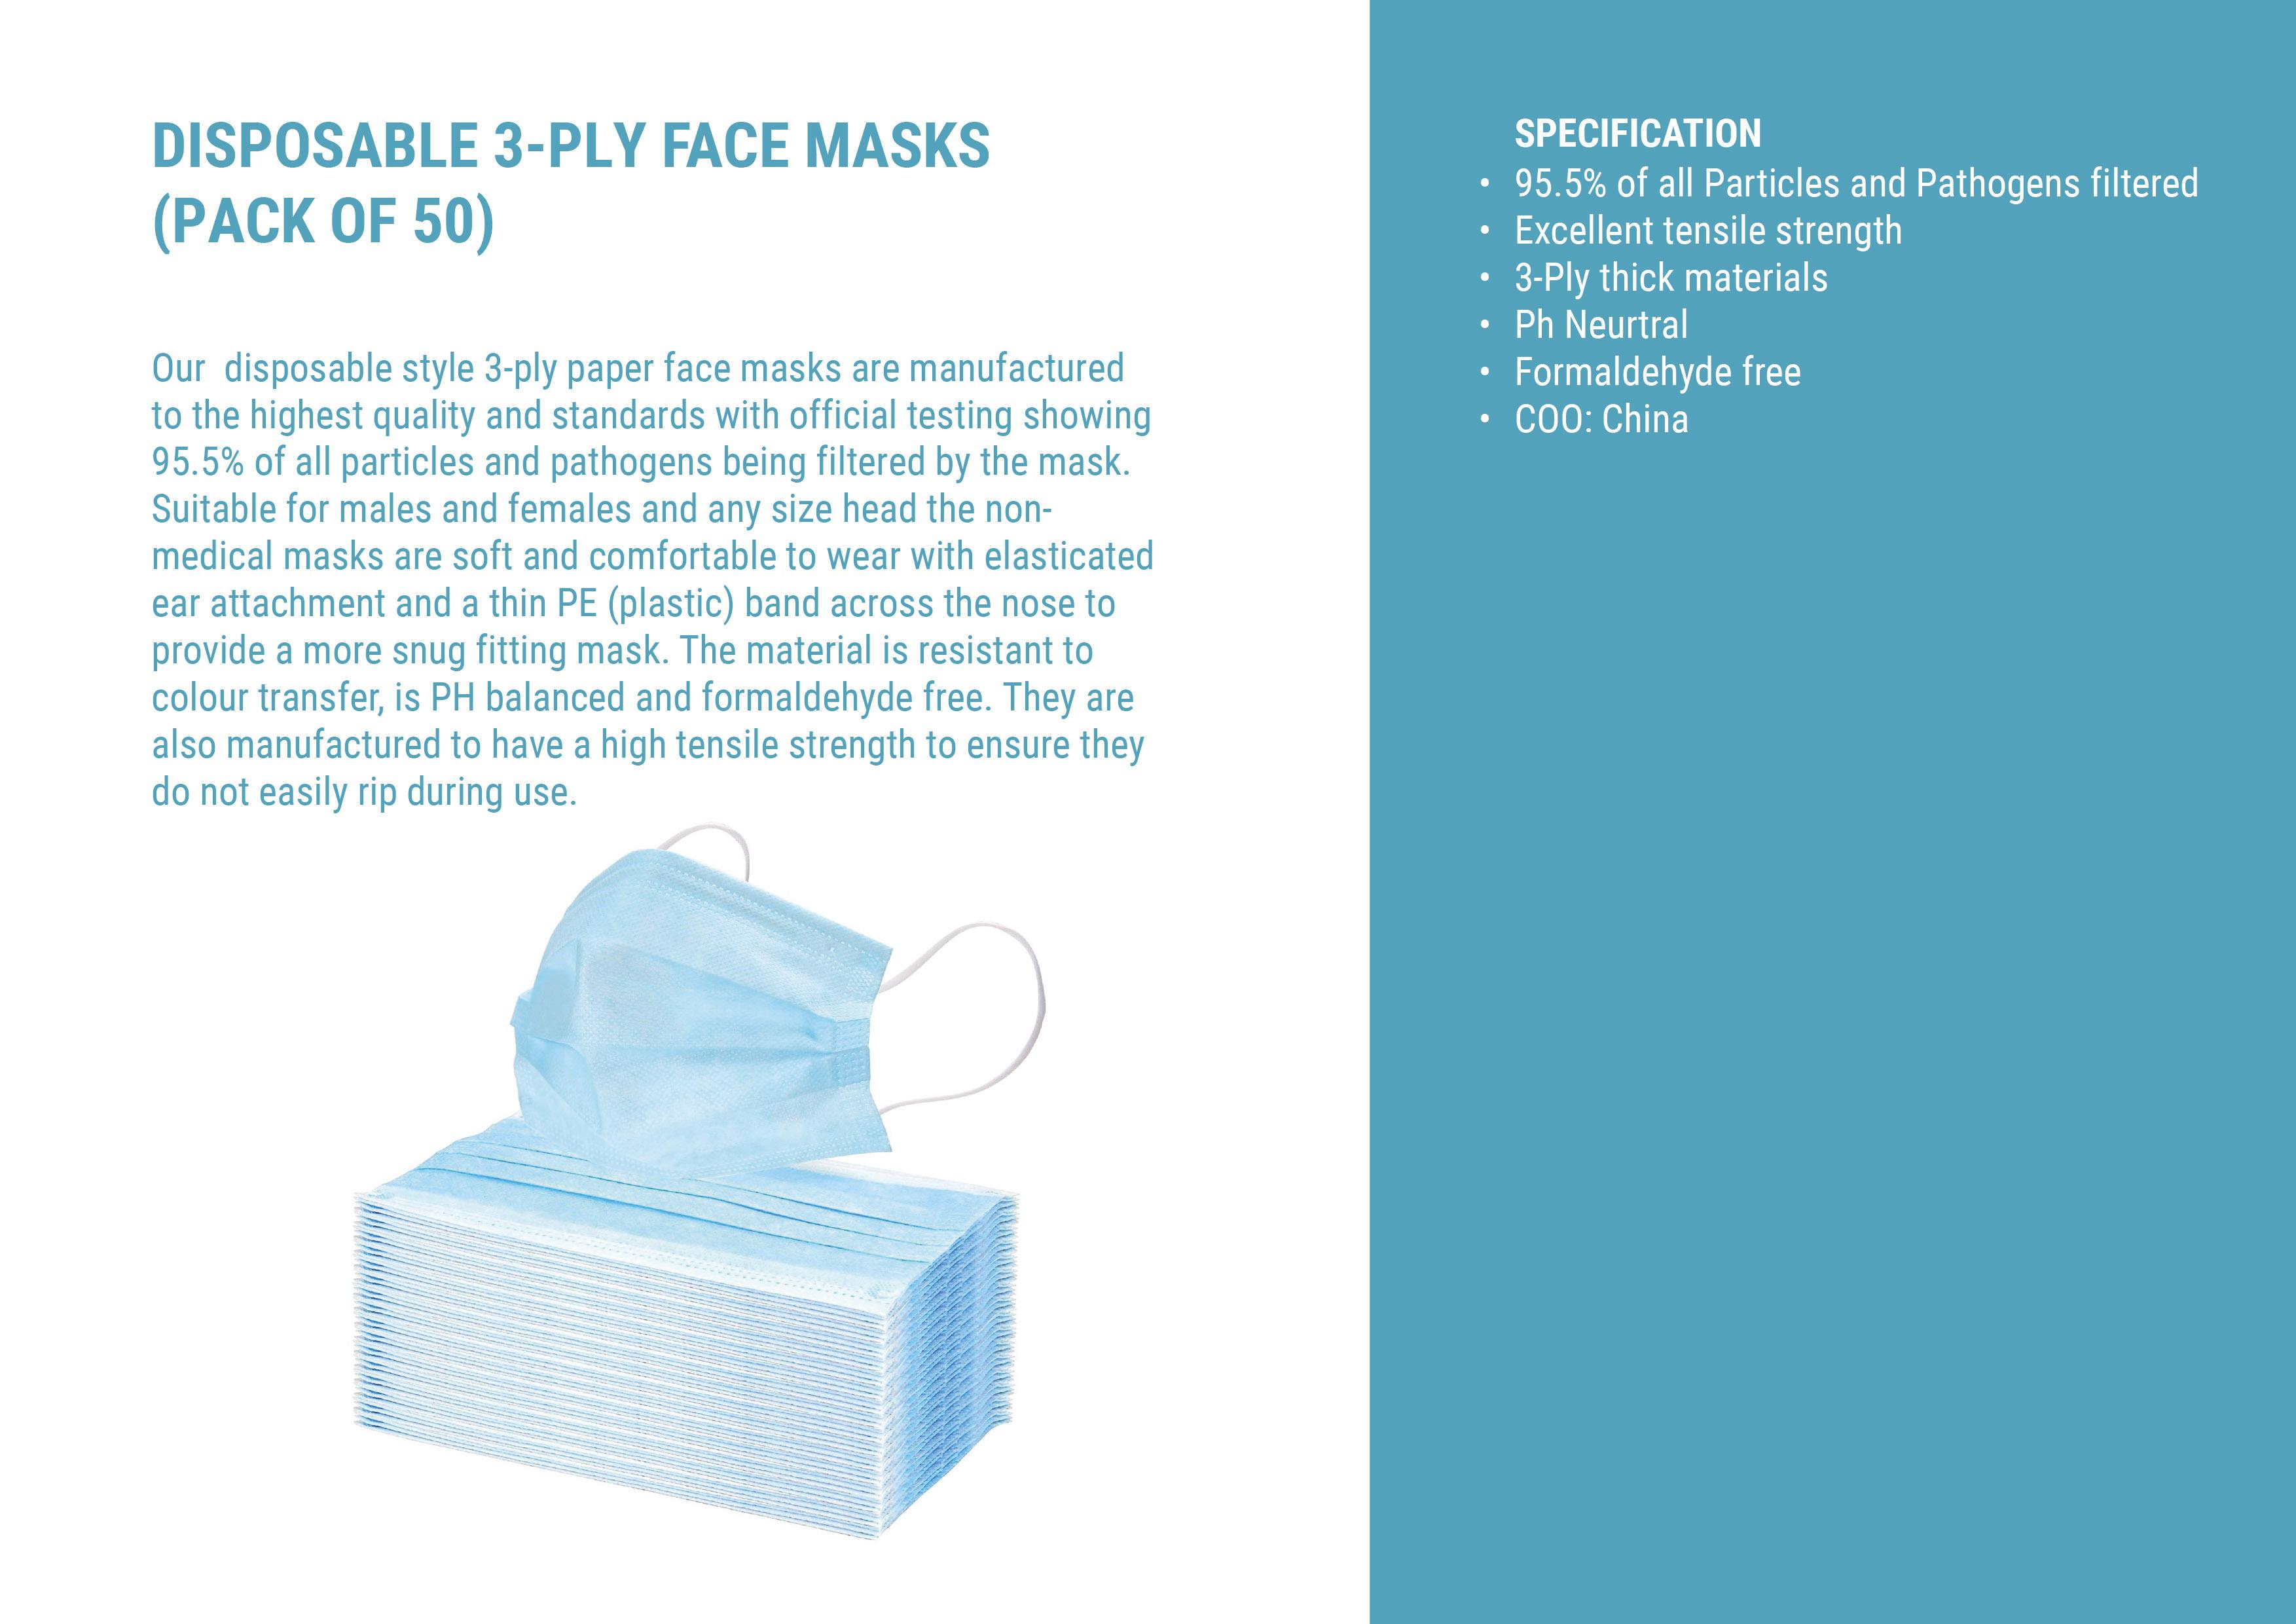 disposable face masks information